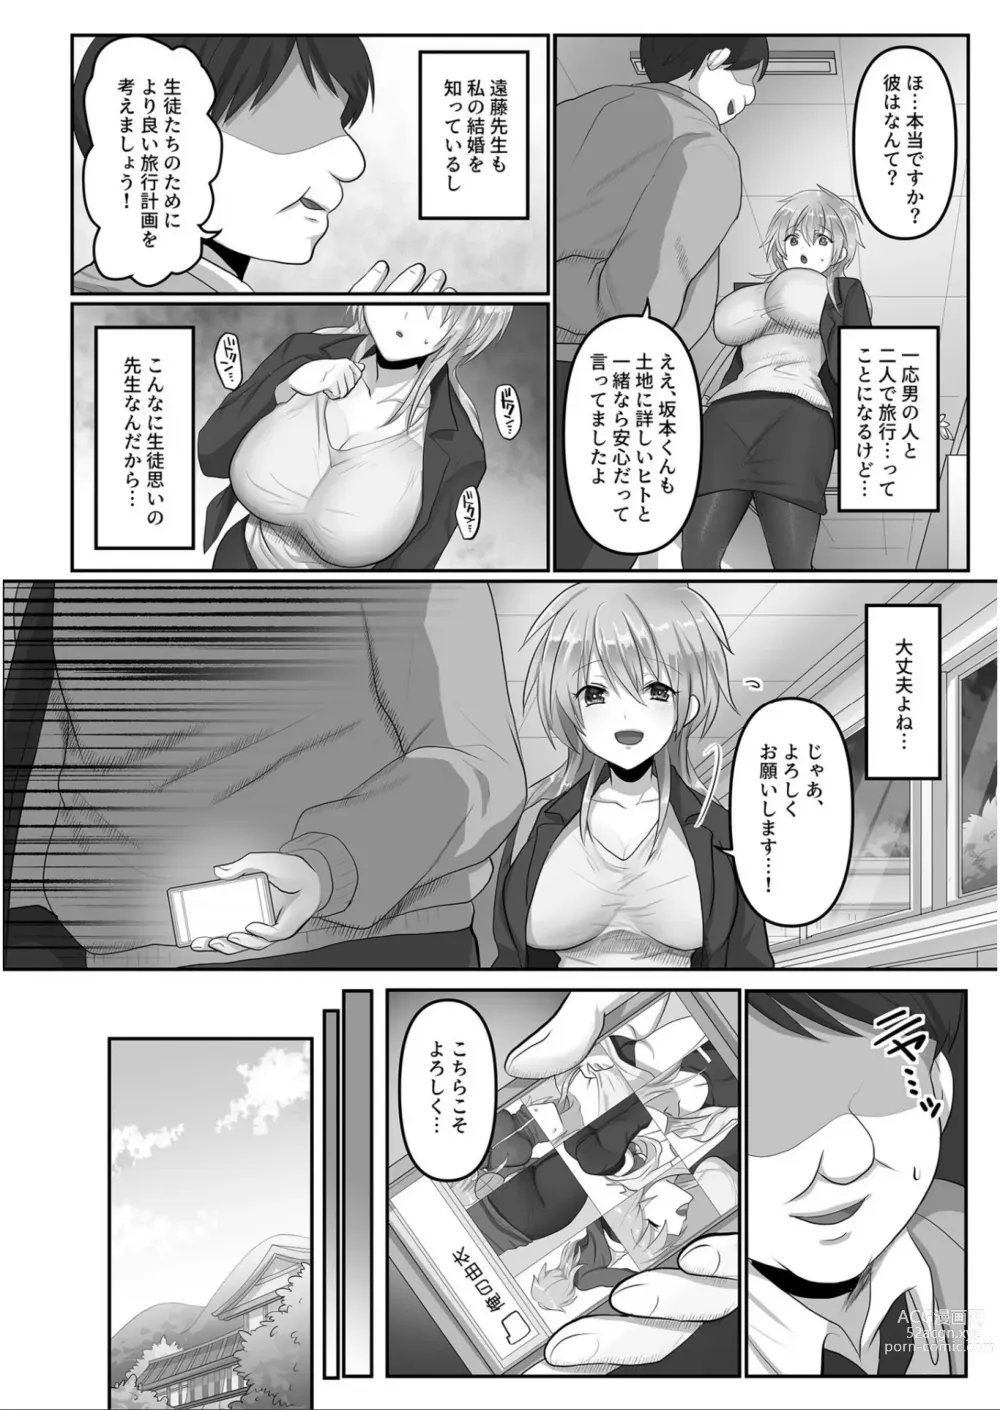 Page 7 of manga Kegasareta Watashi...